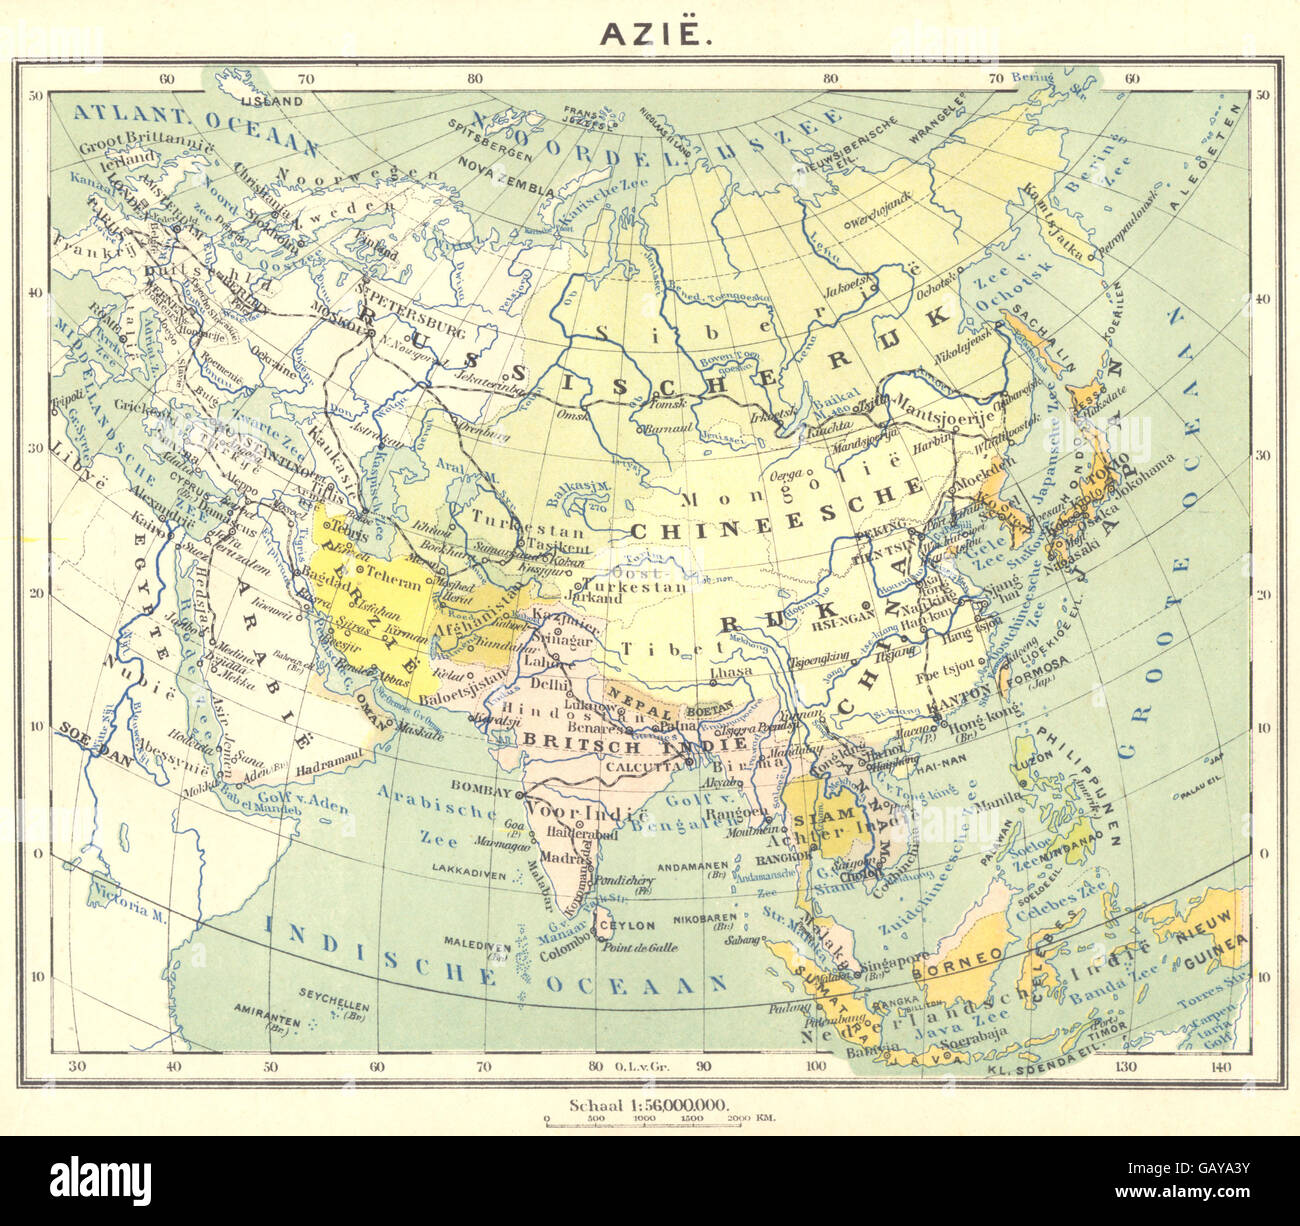 Asie : Europe (2) , 1922 carte vintage Banque D'Images